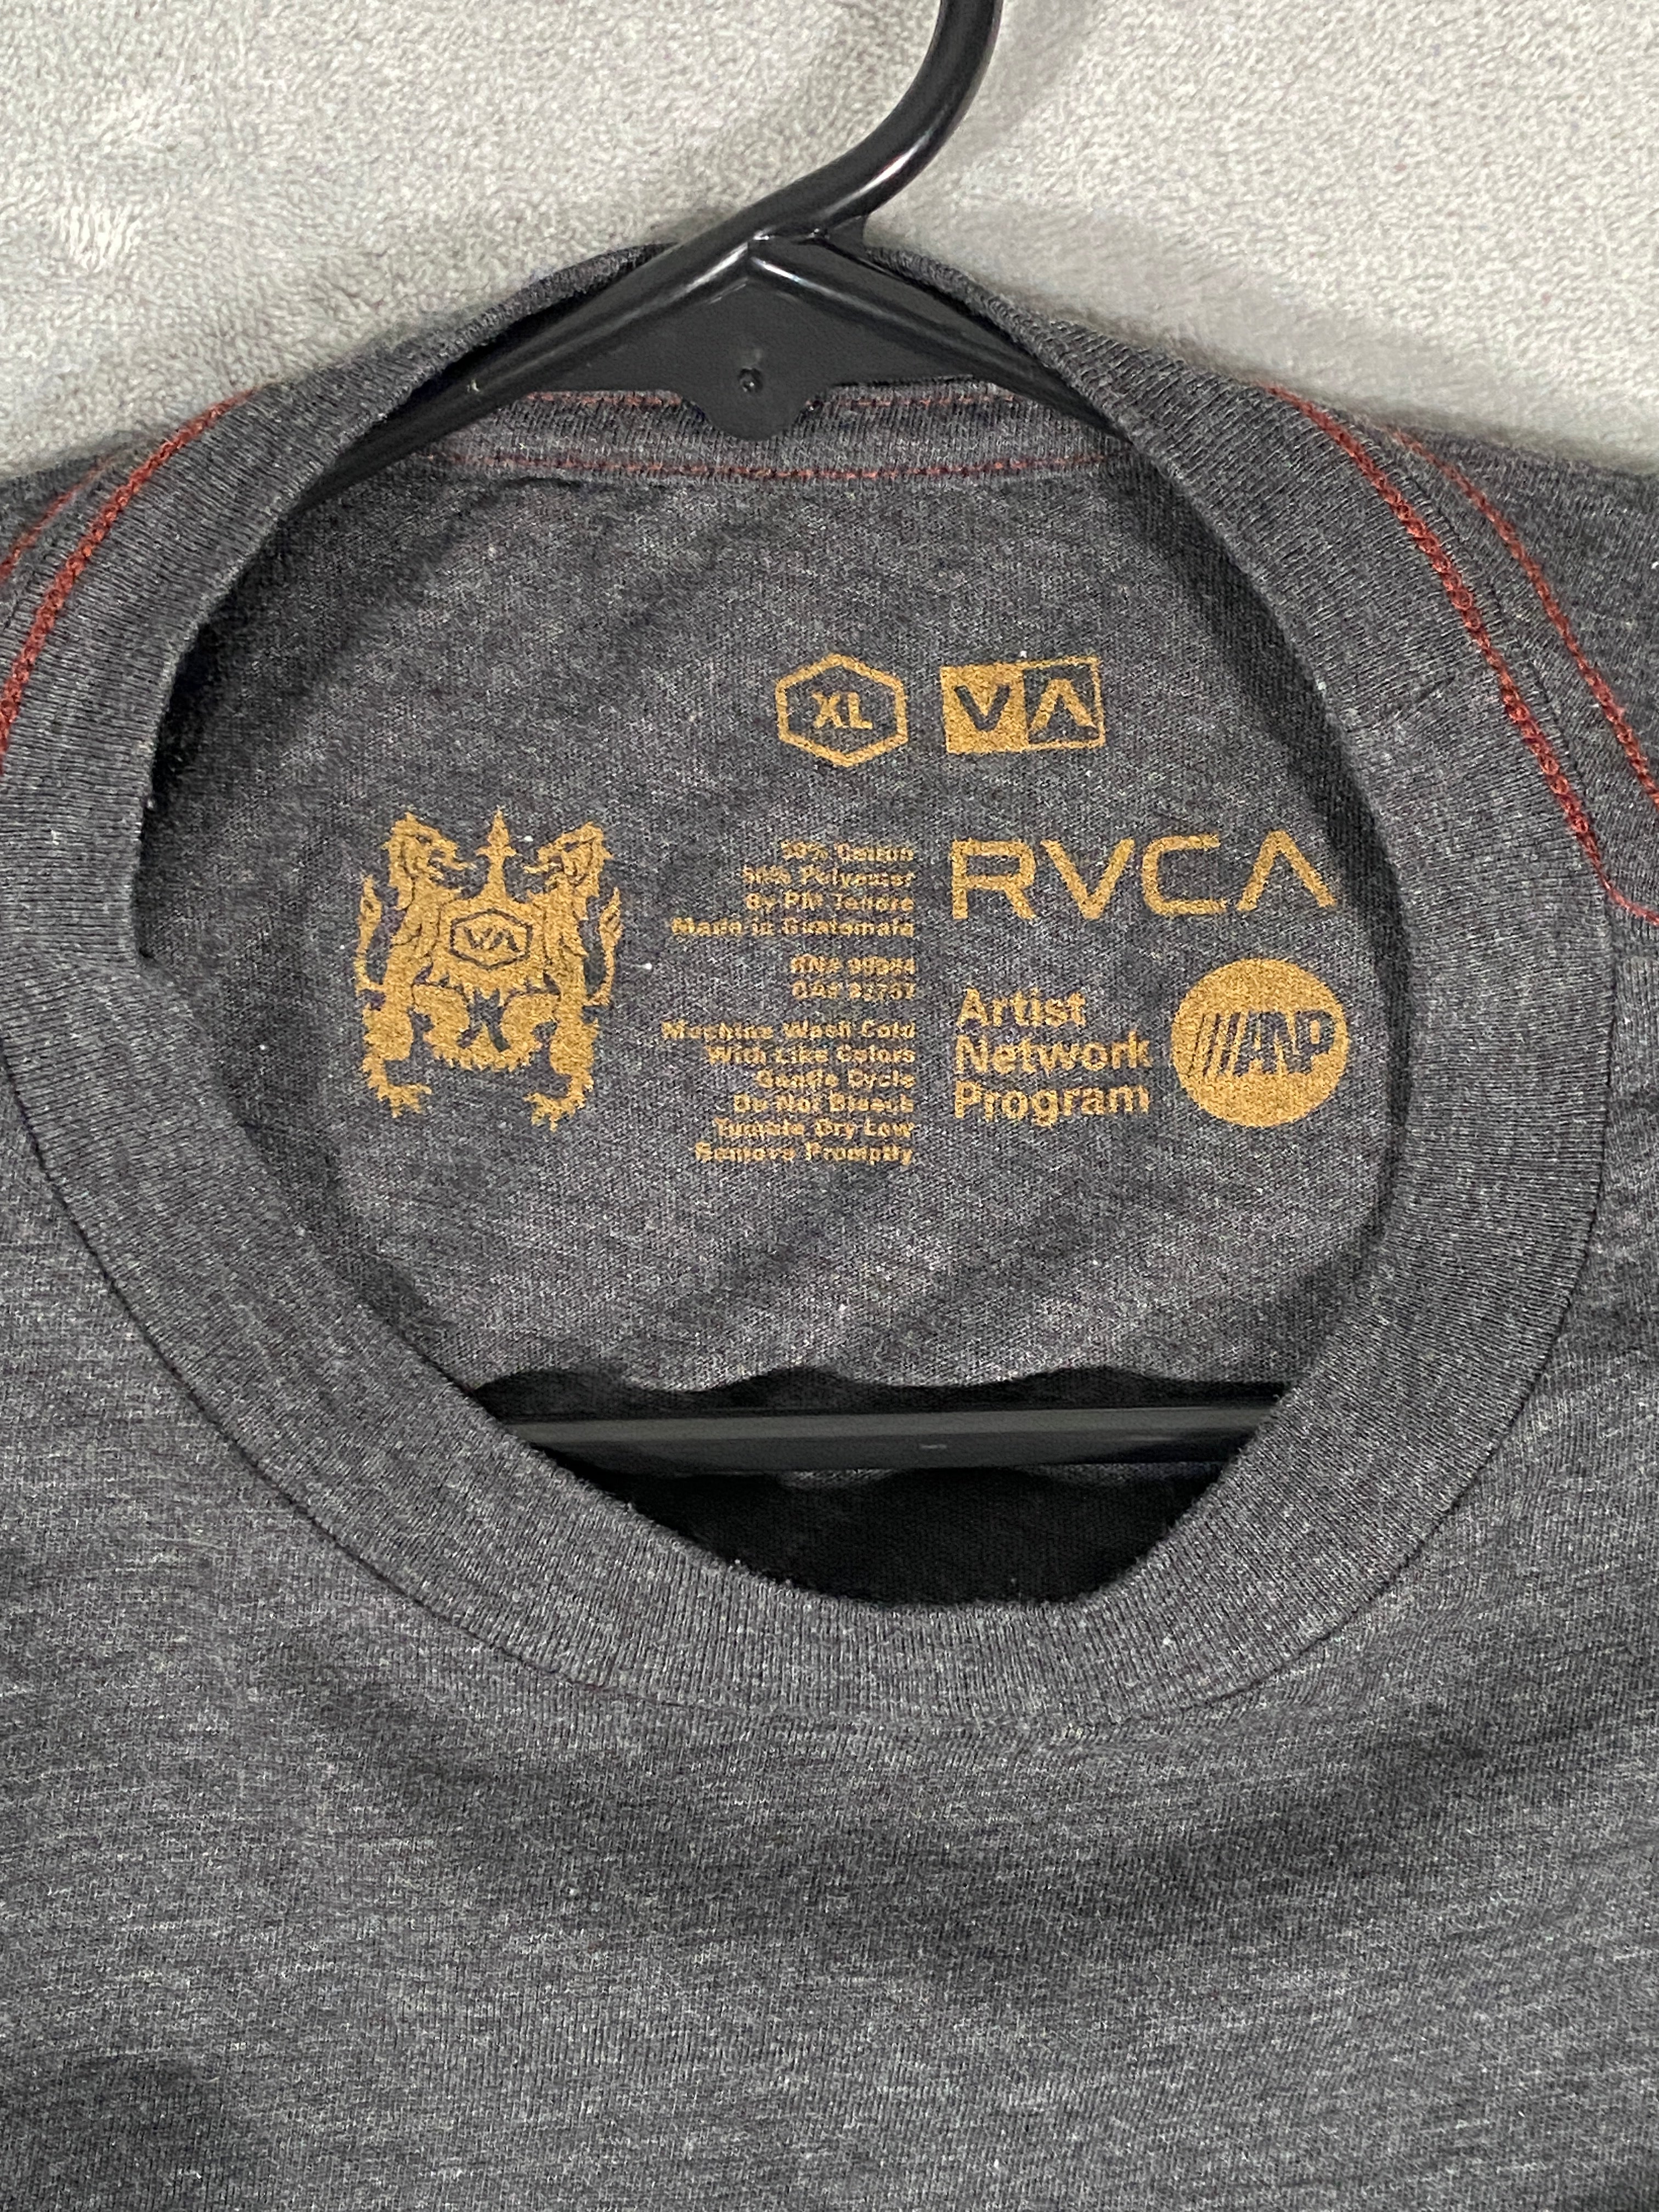 RVCA T Shirt Mens Extra Large Grey Short Sleeve Logo Artists Network  Program